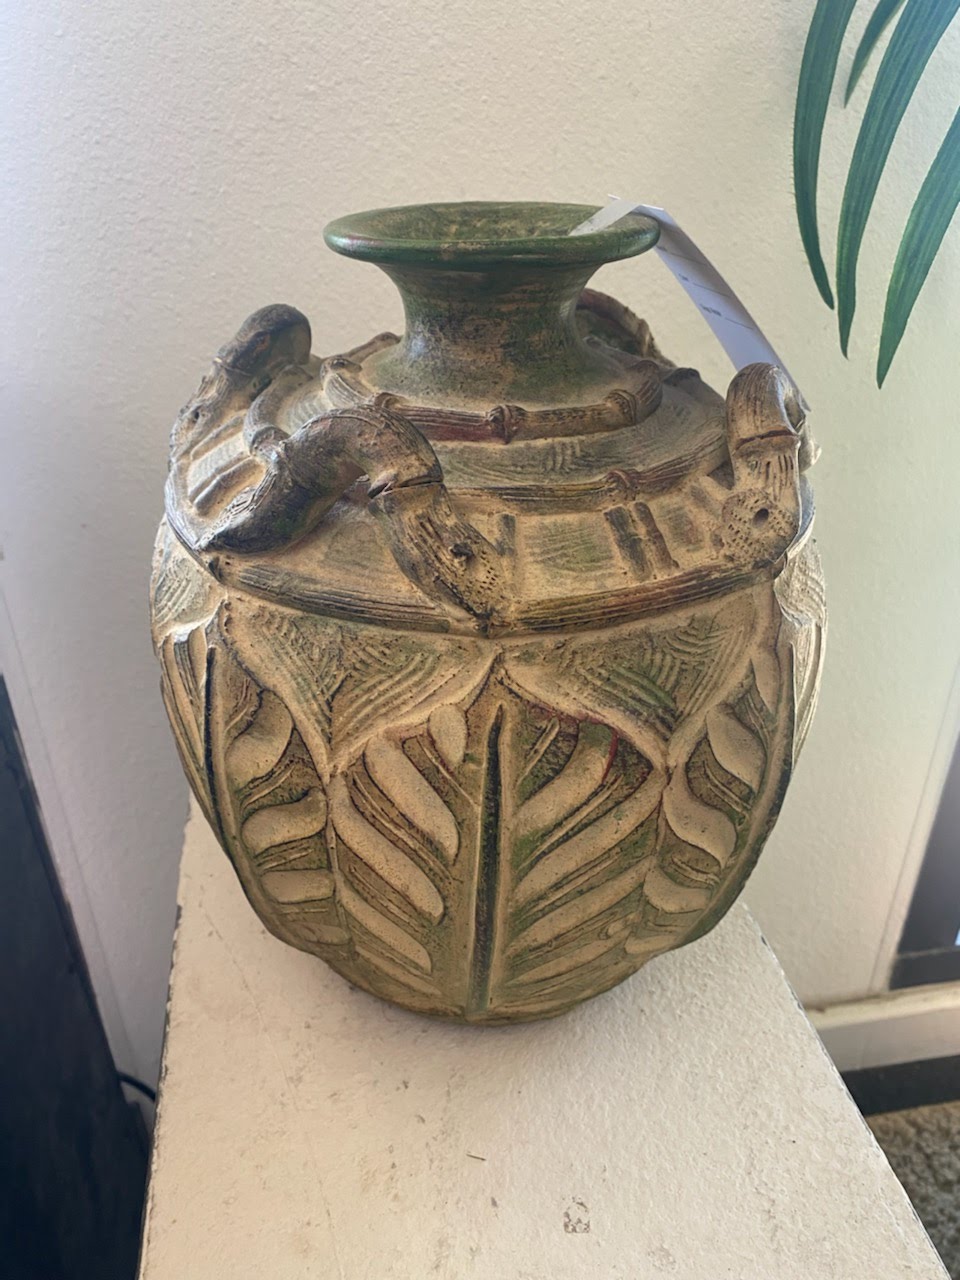 Clay vase with leaf design